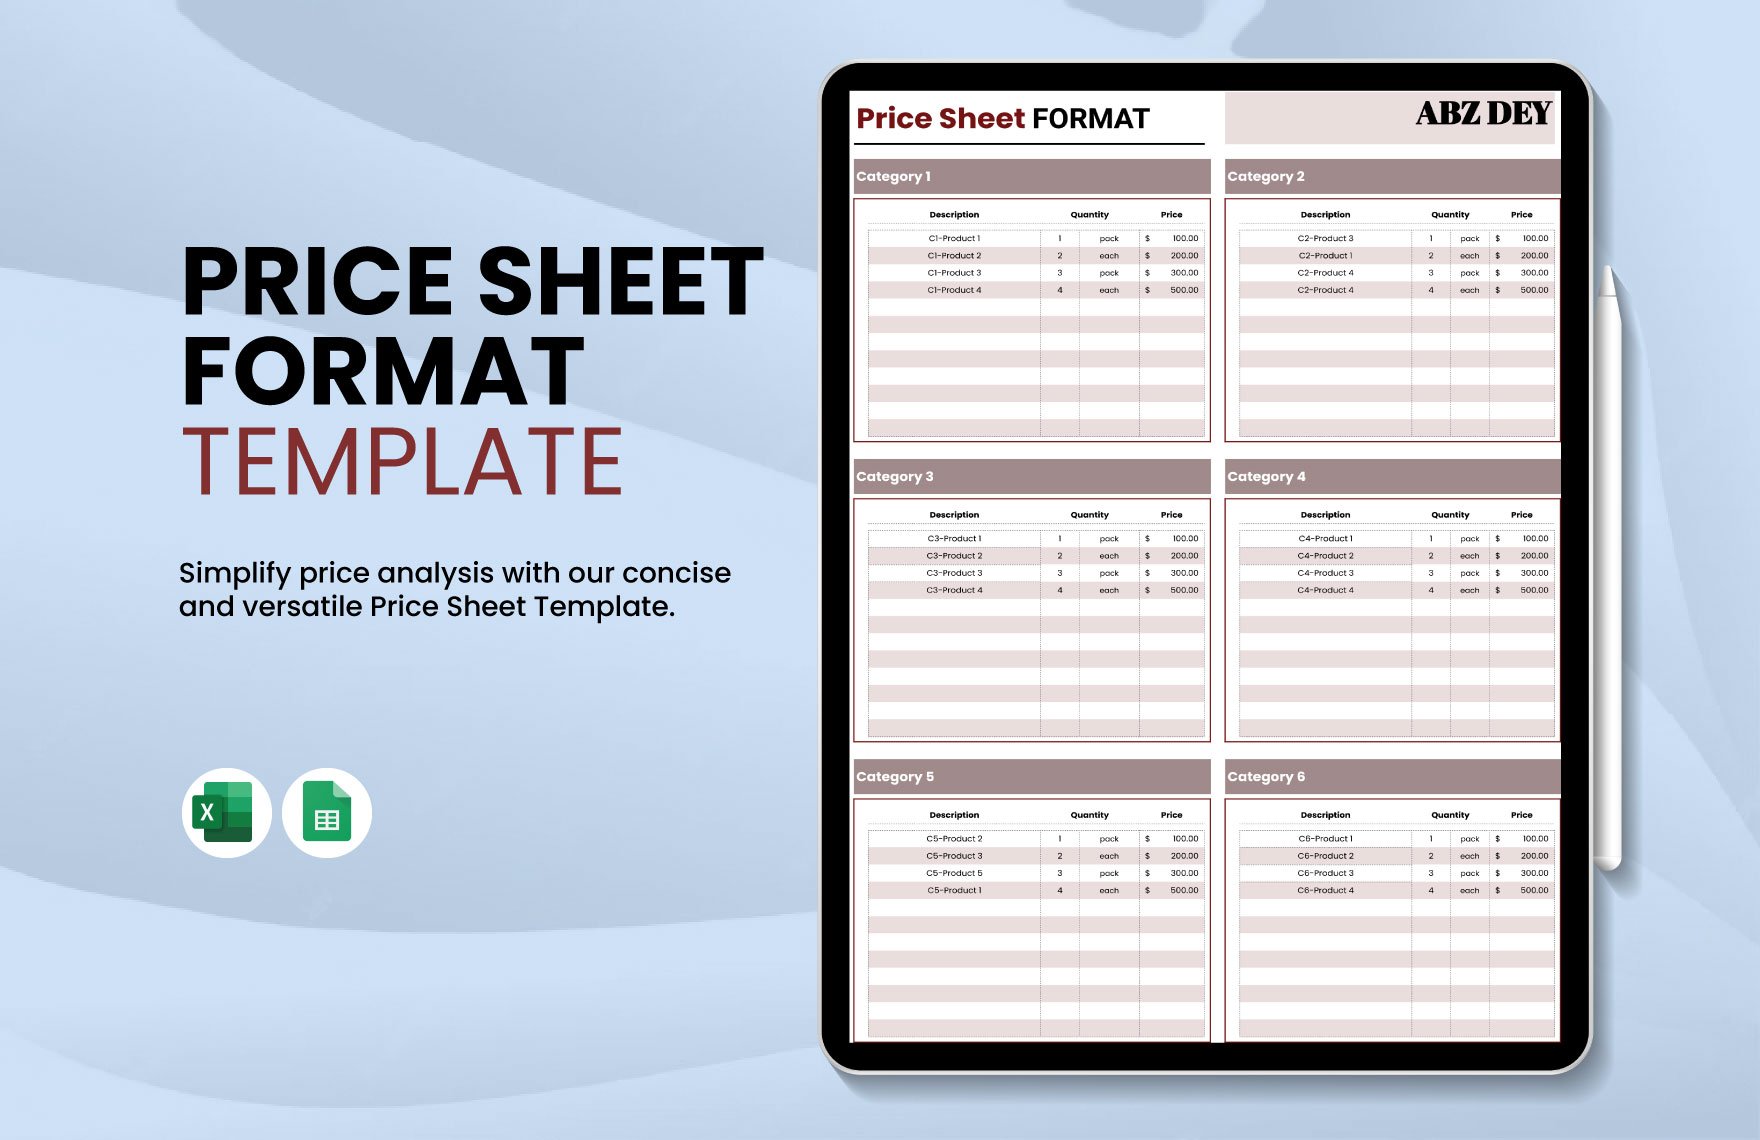 Price Sheet Format Template